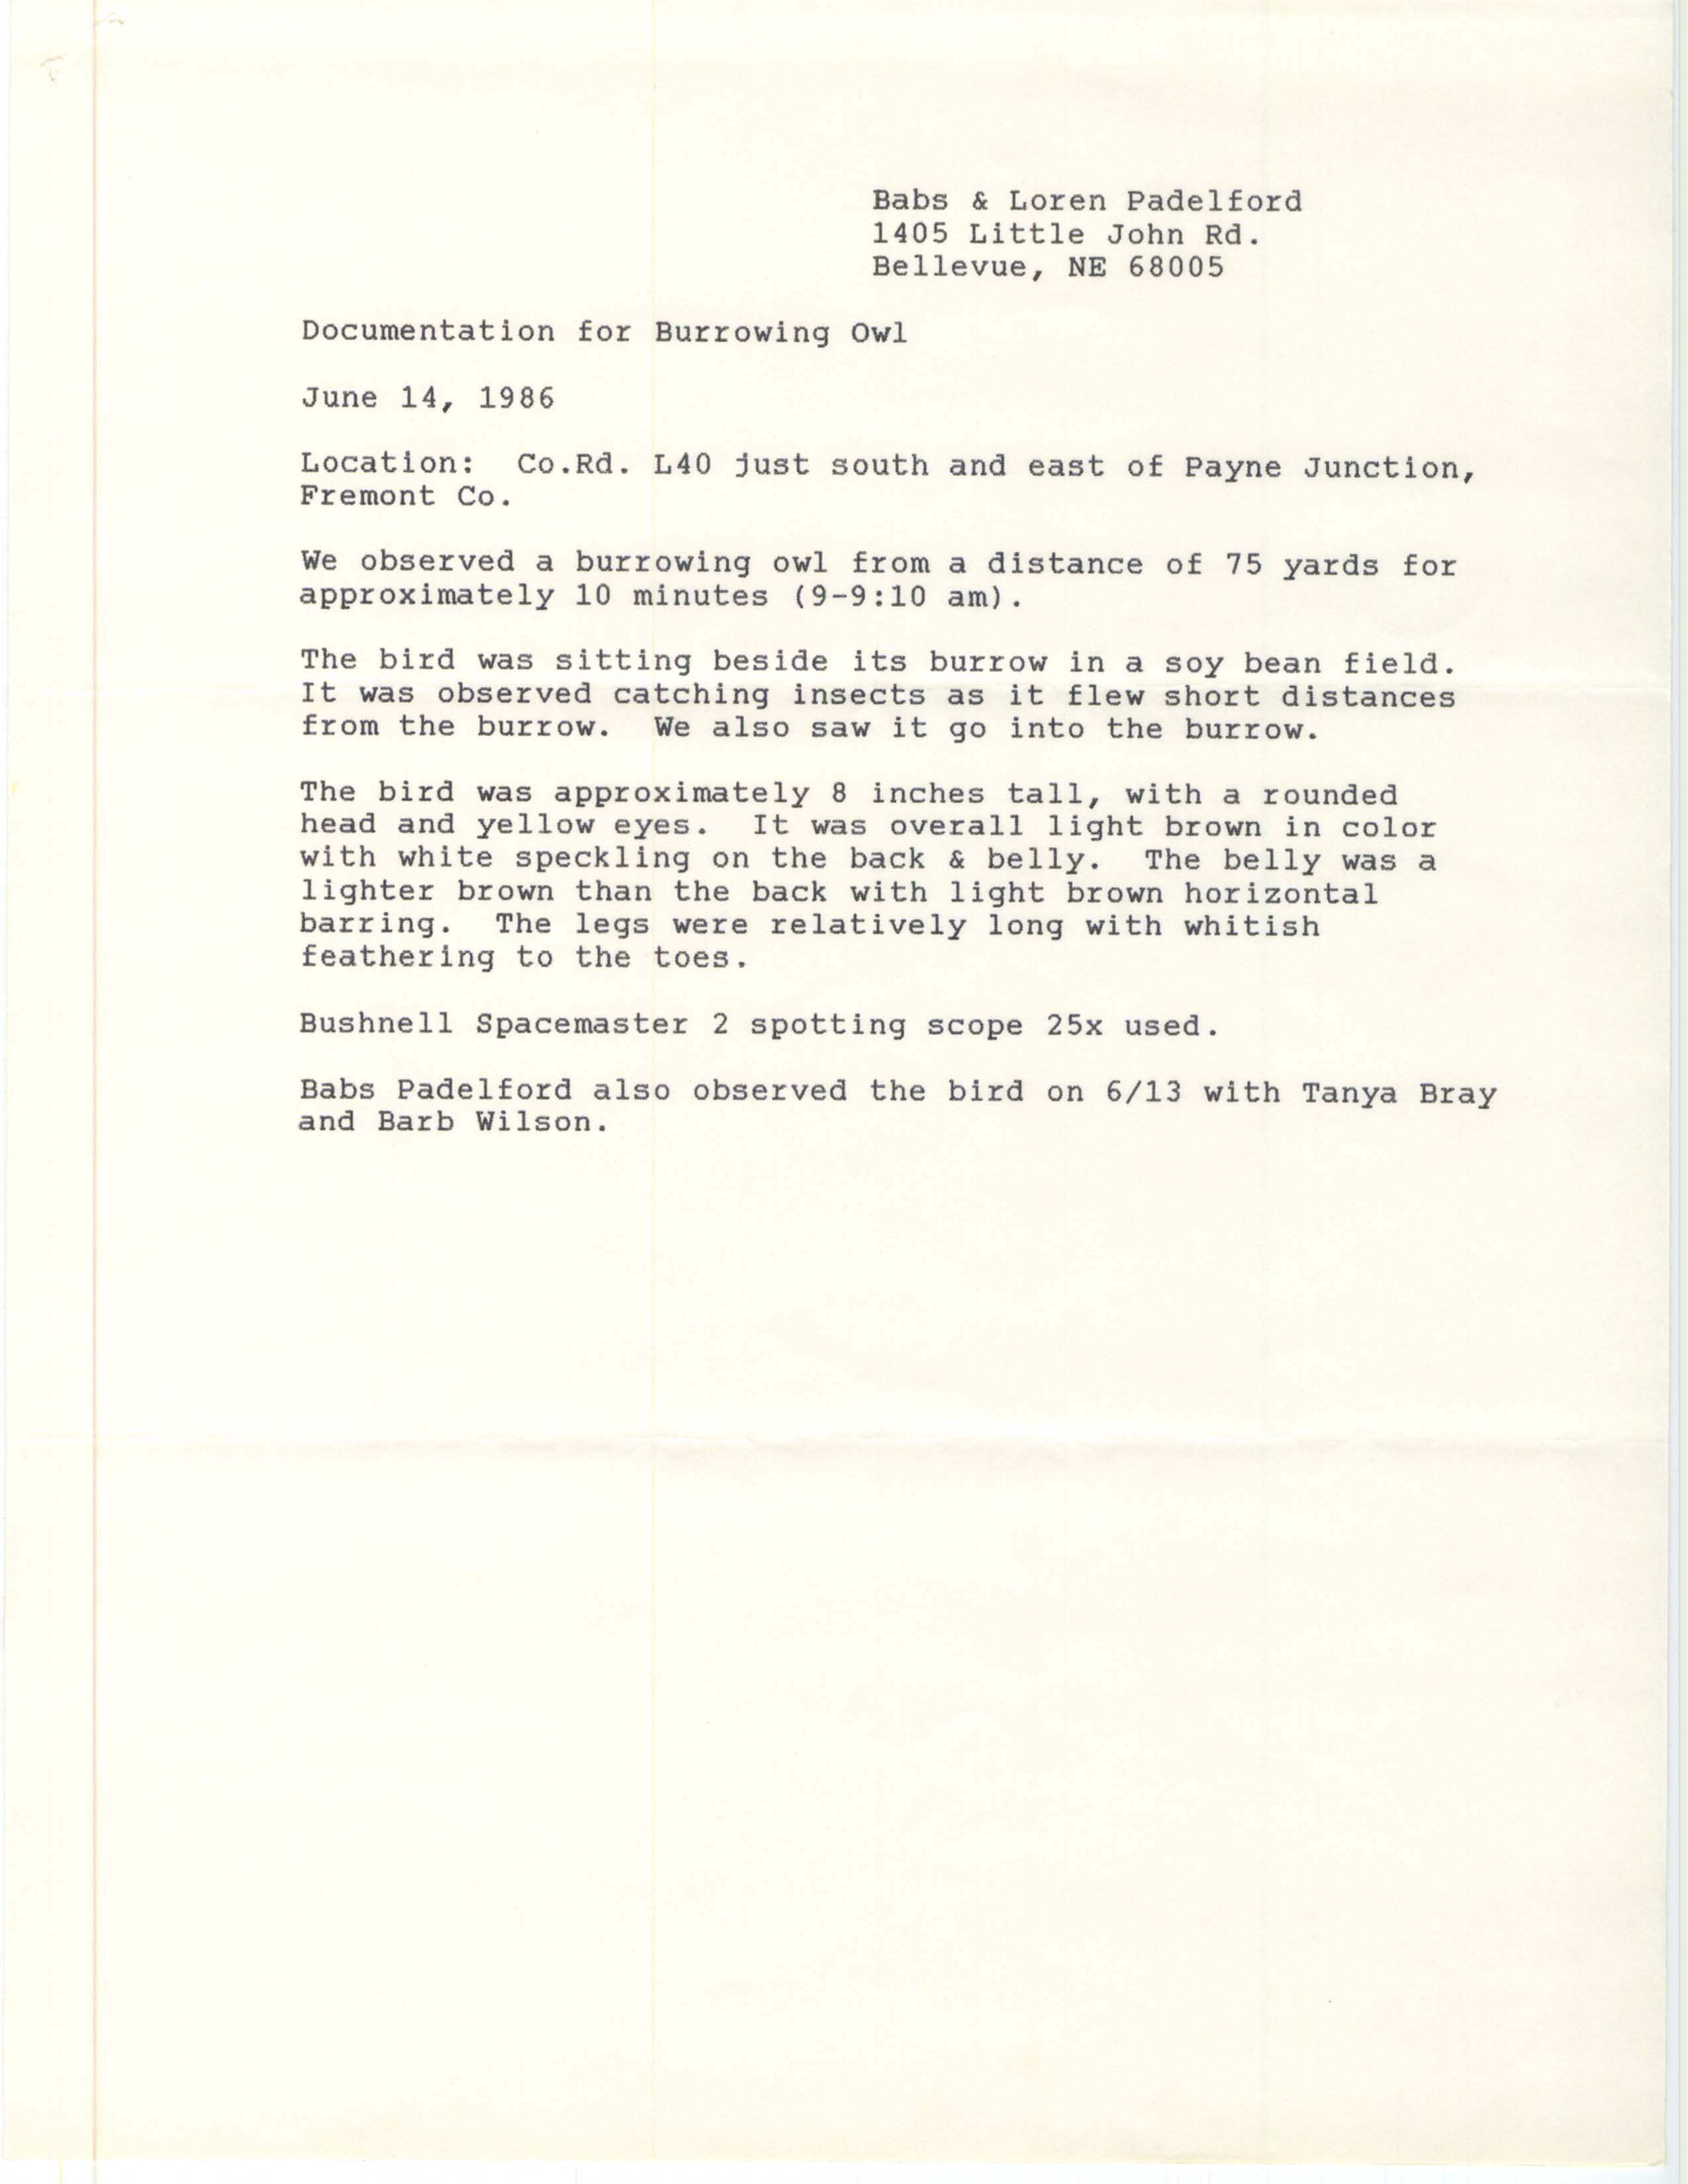 Documentation for Burrowing Owl, June 14, 1986